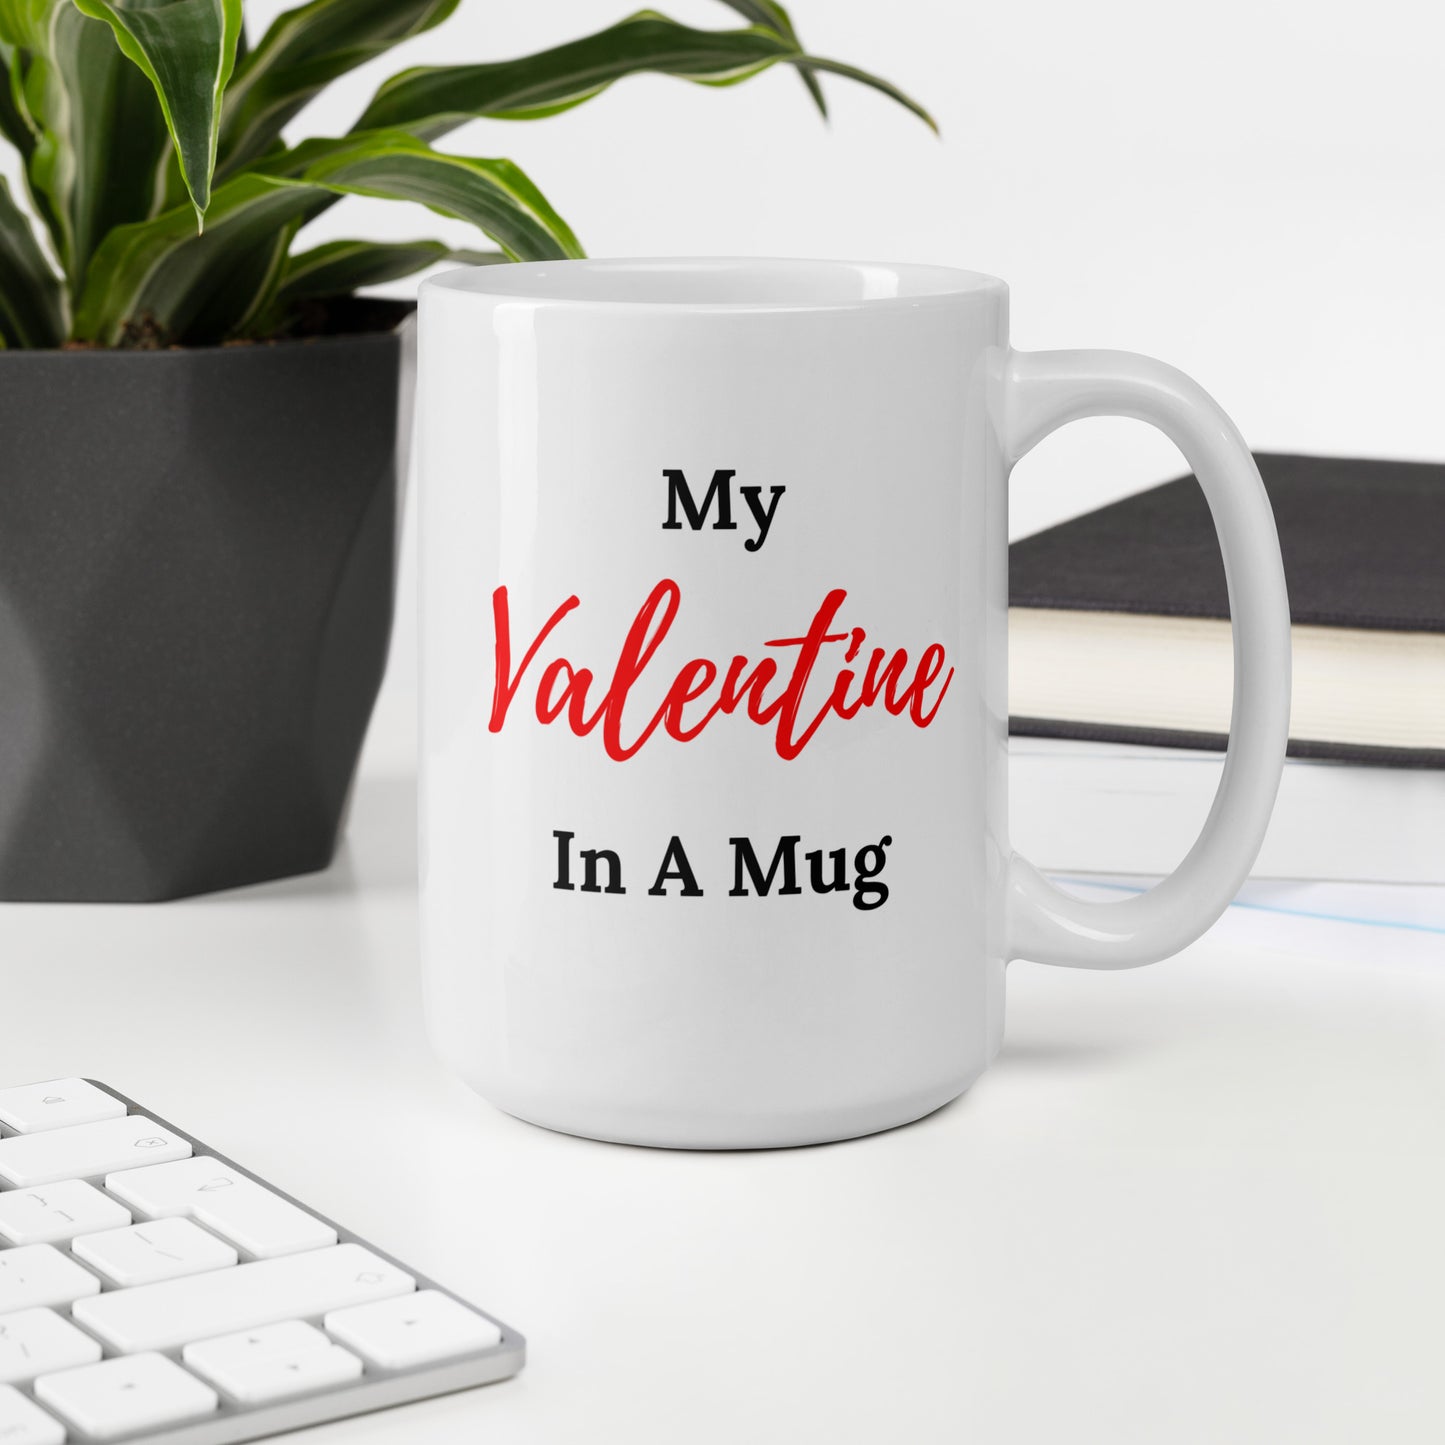 My Valentine In A Mug, Anti Valentine Gift, Single Valentine Coffee Mug, Funny Valentine Saying, Funny Valentine Gift, Anti Valentine's Day